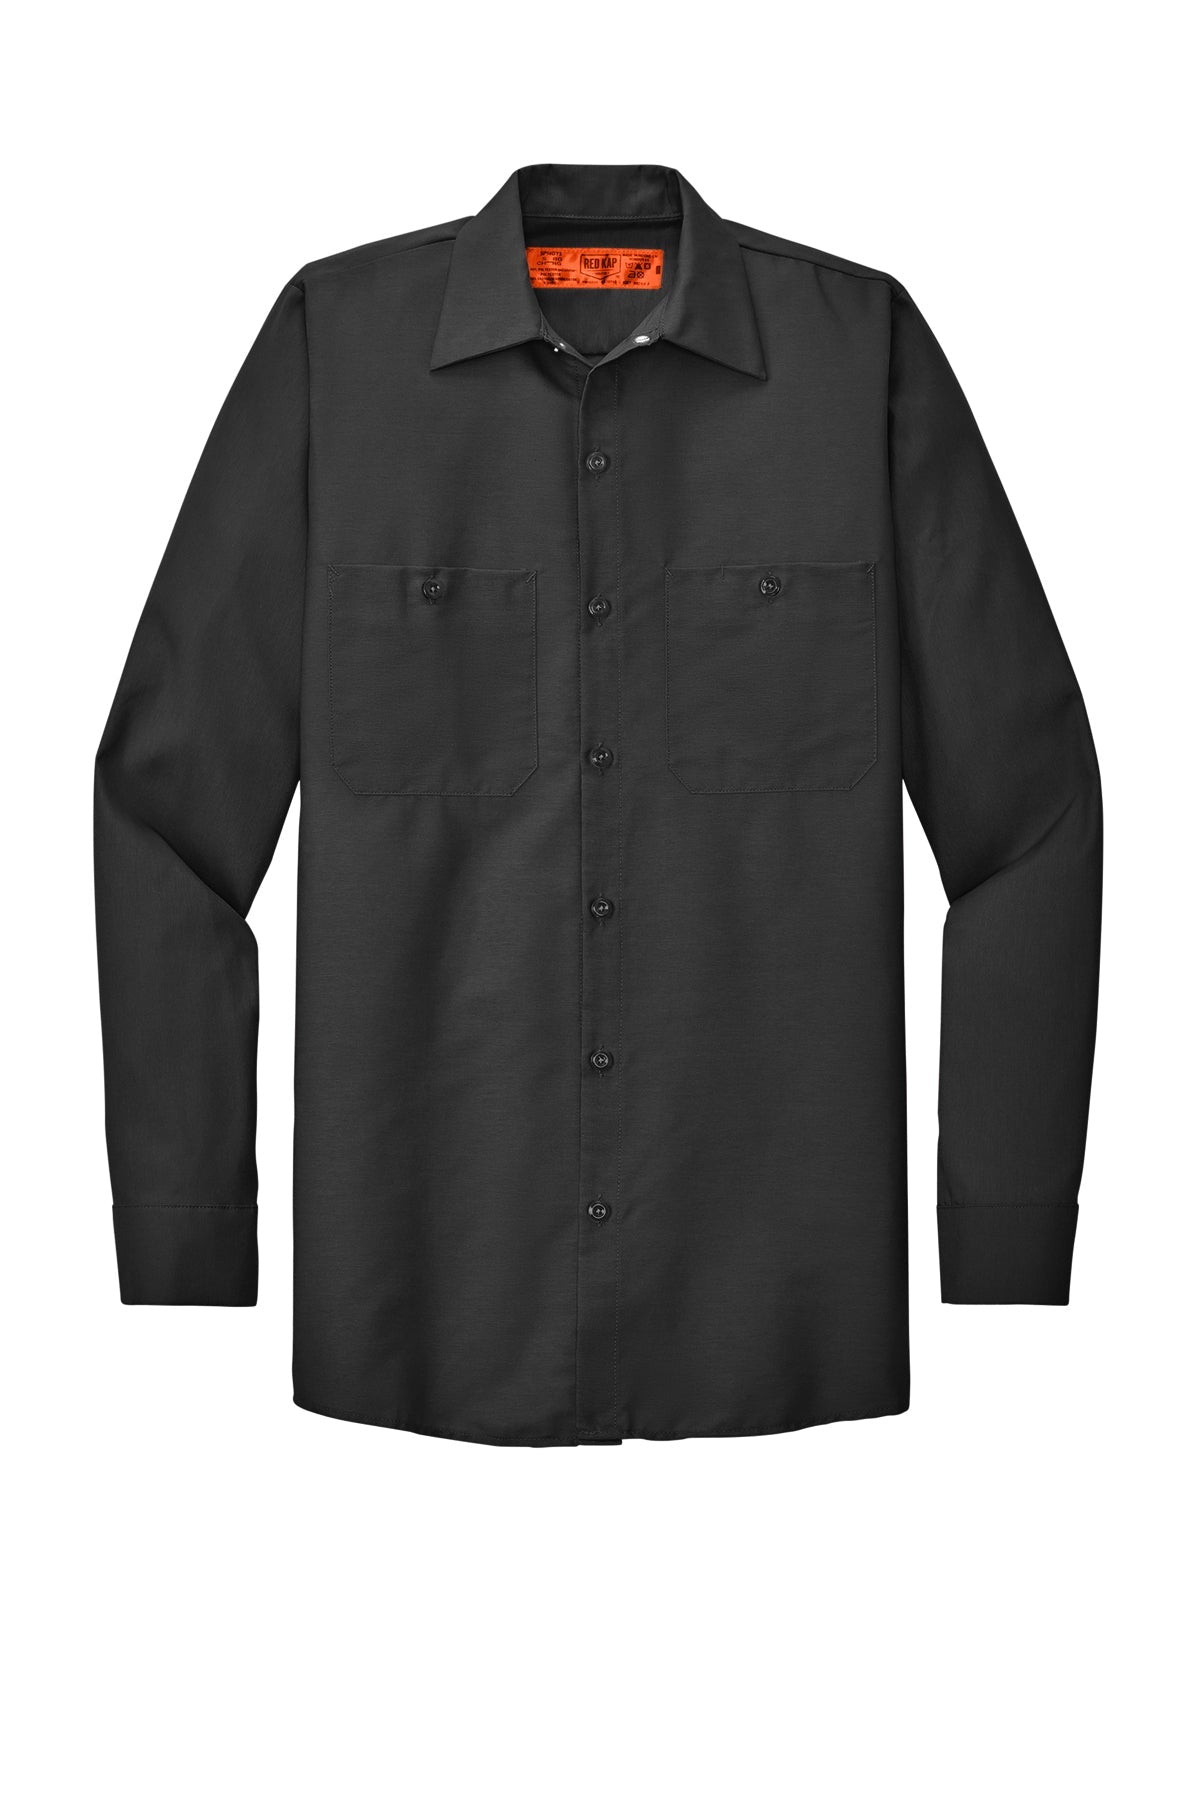 SP14 Red Kap® Long Sleeve Industrial Work Shirt